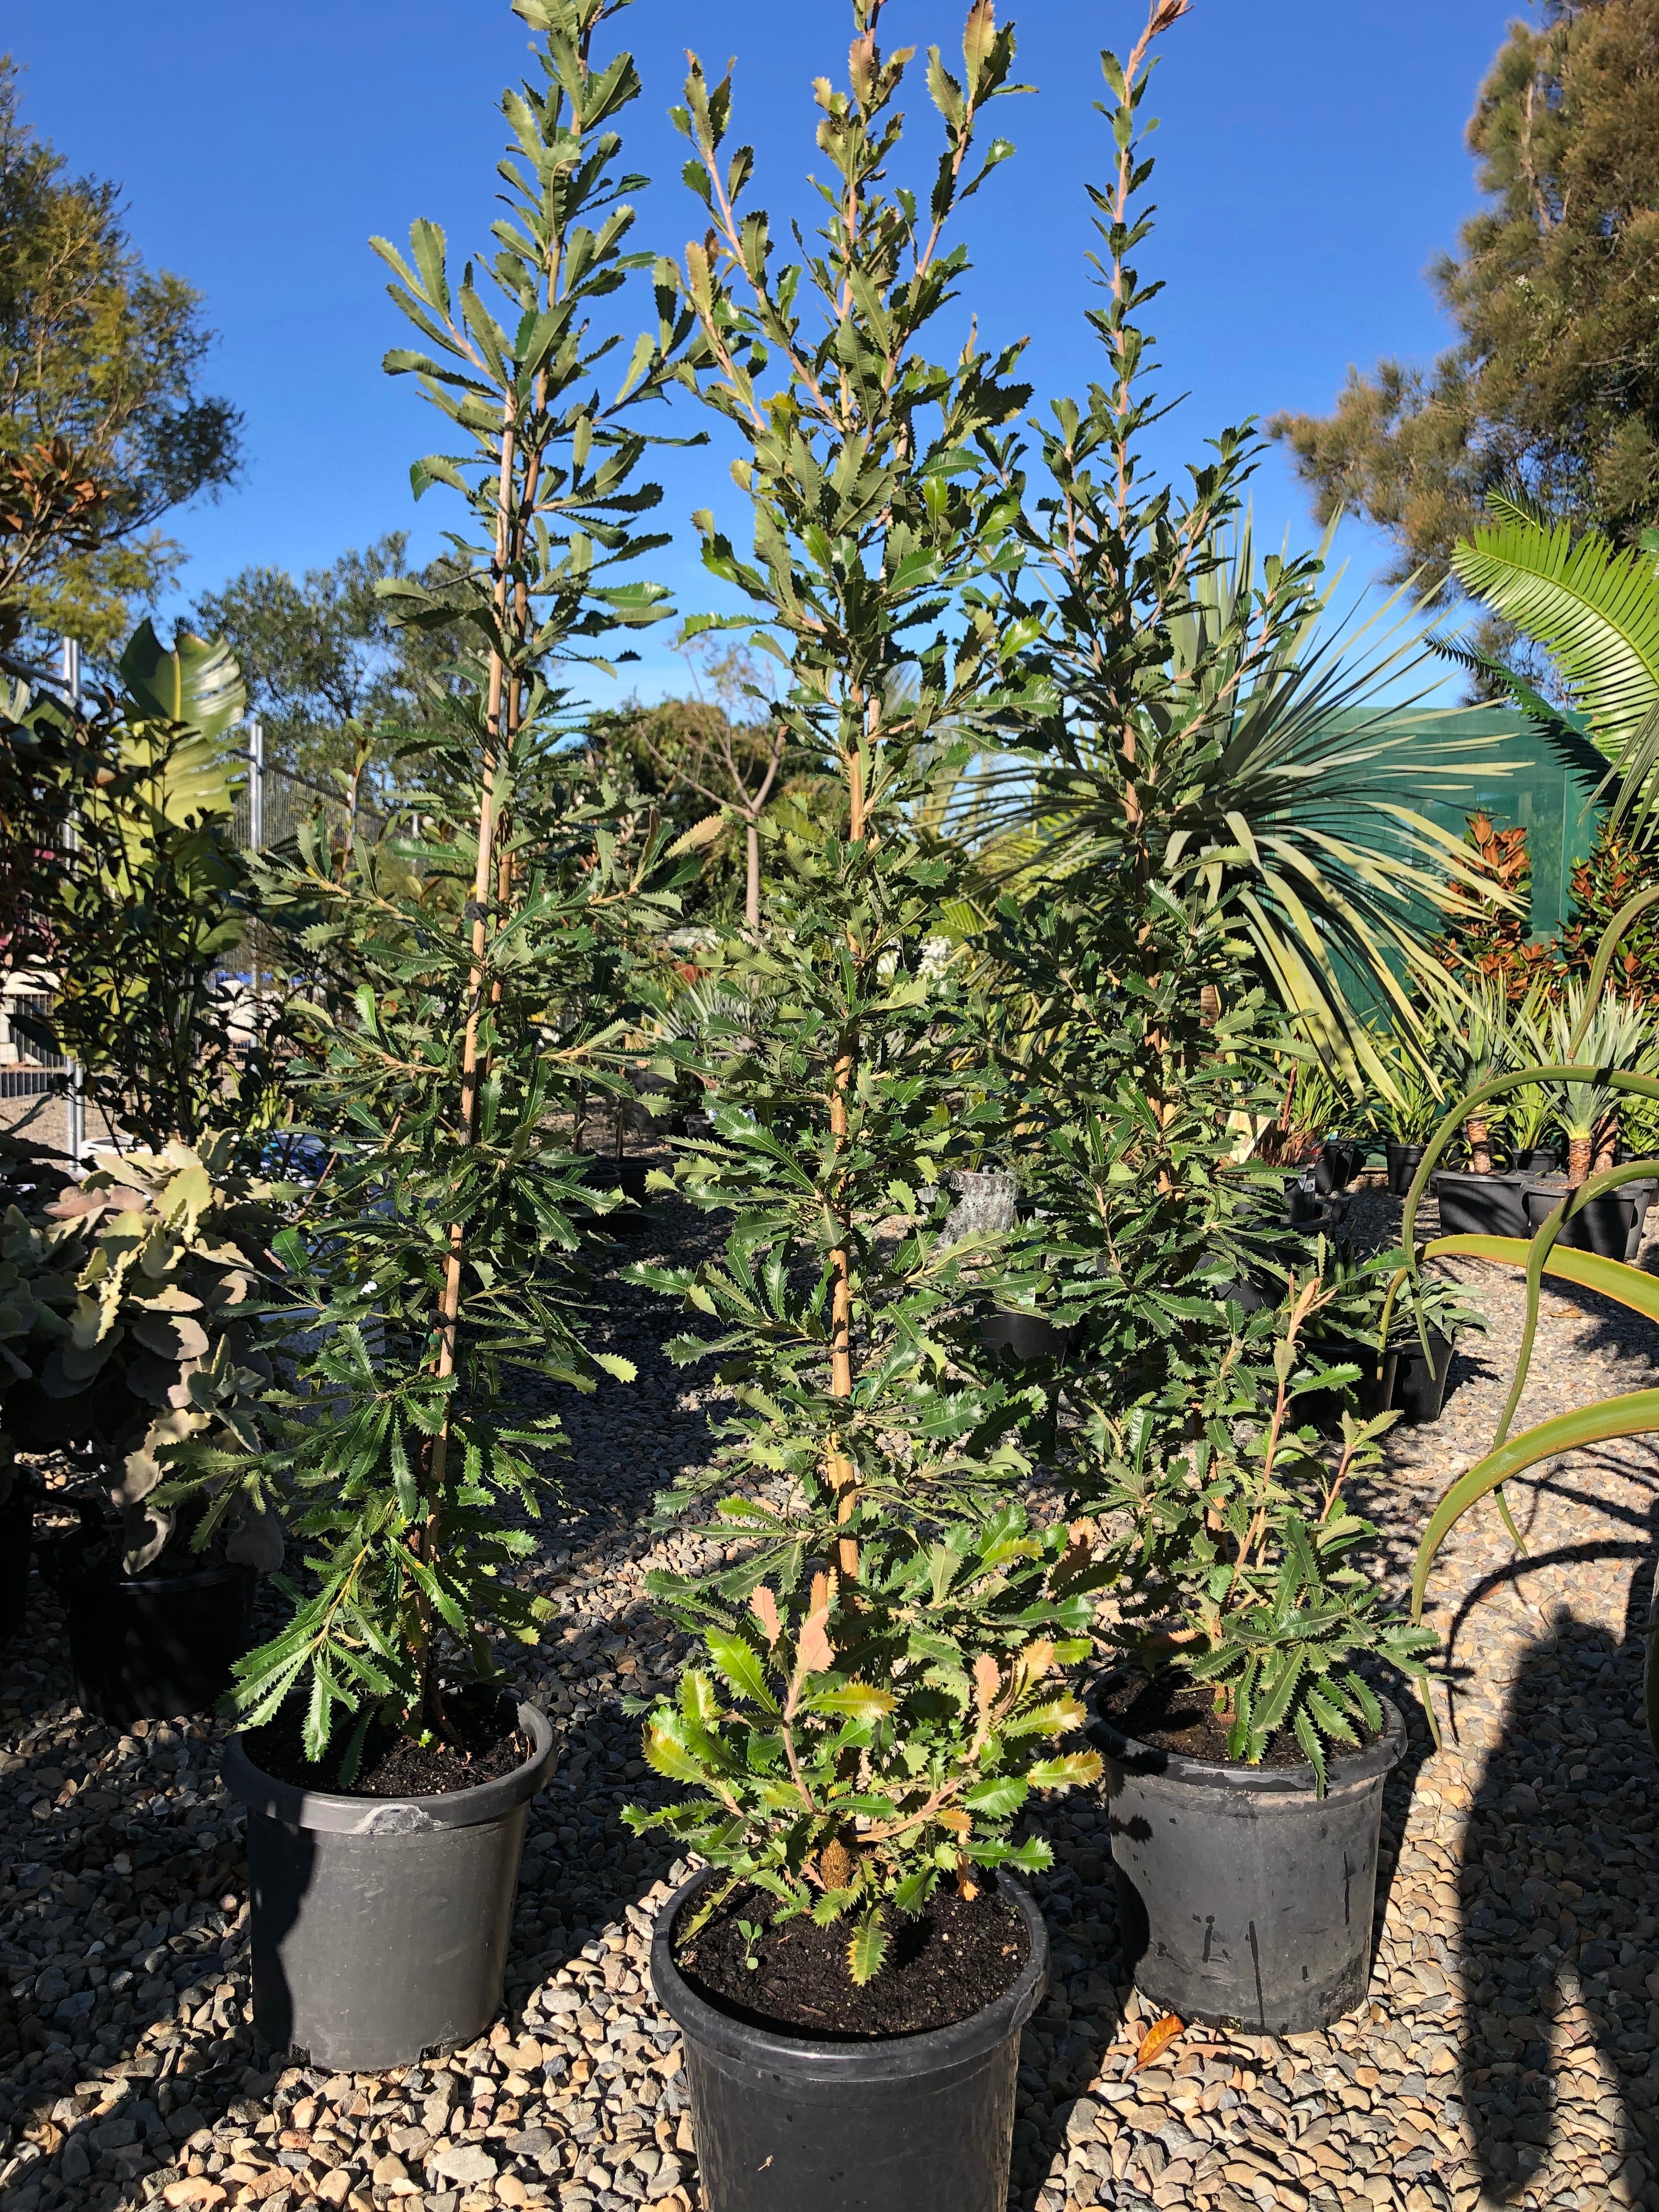 Banksia serrata - Saw Banksia